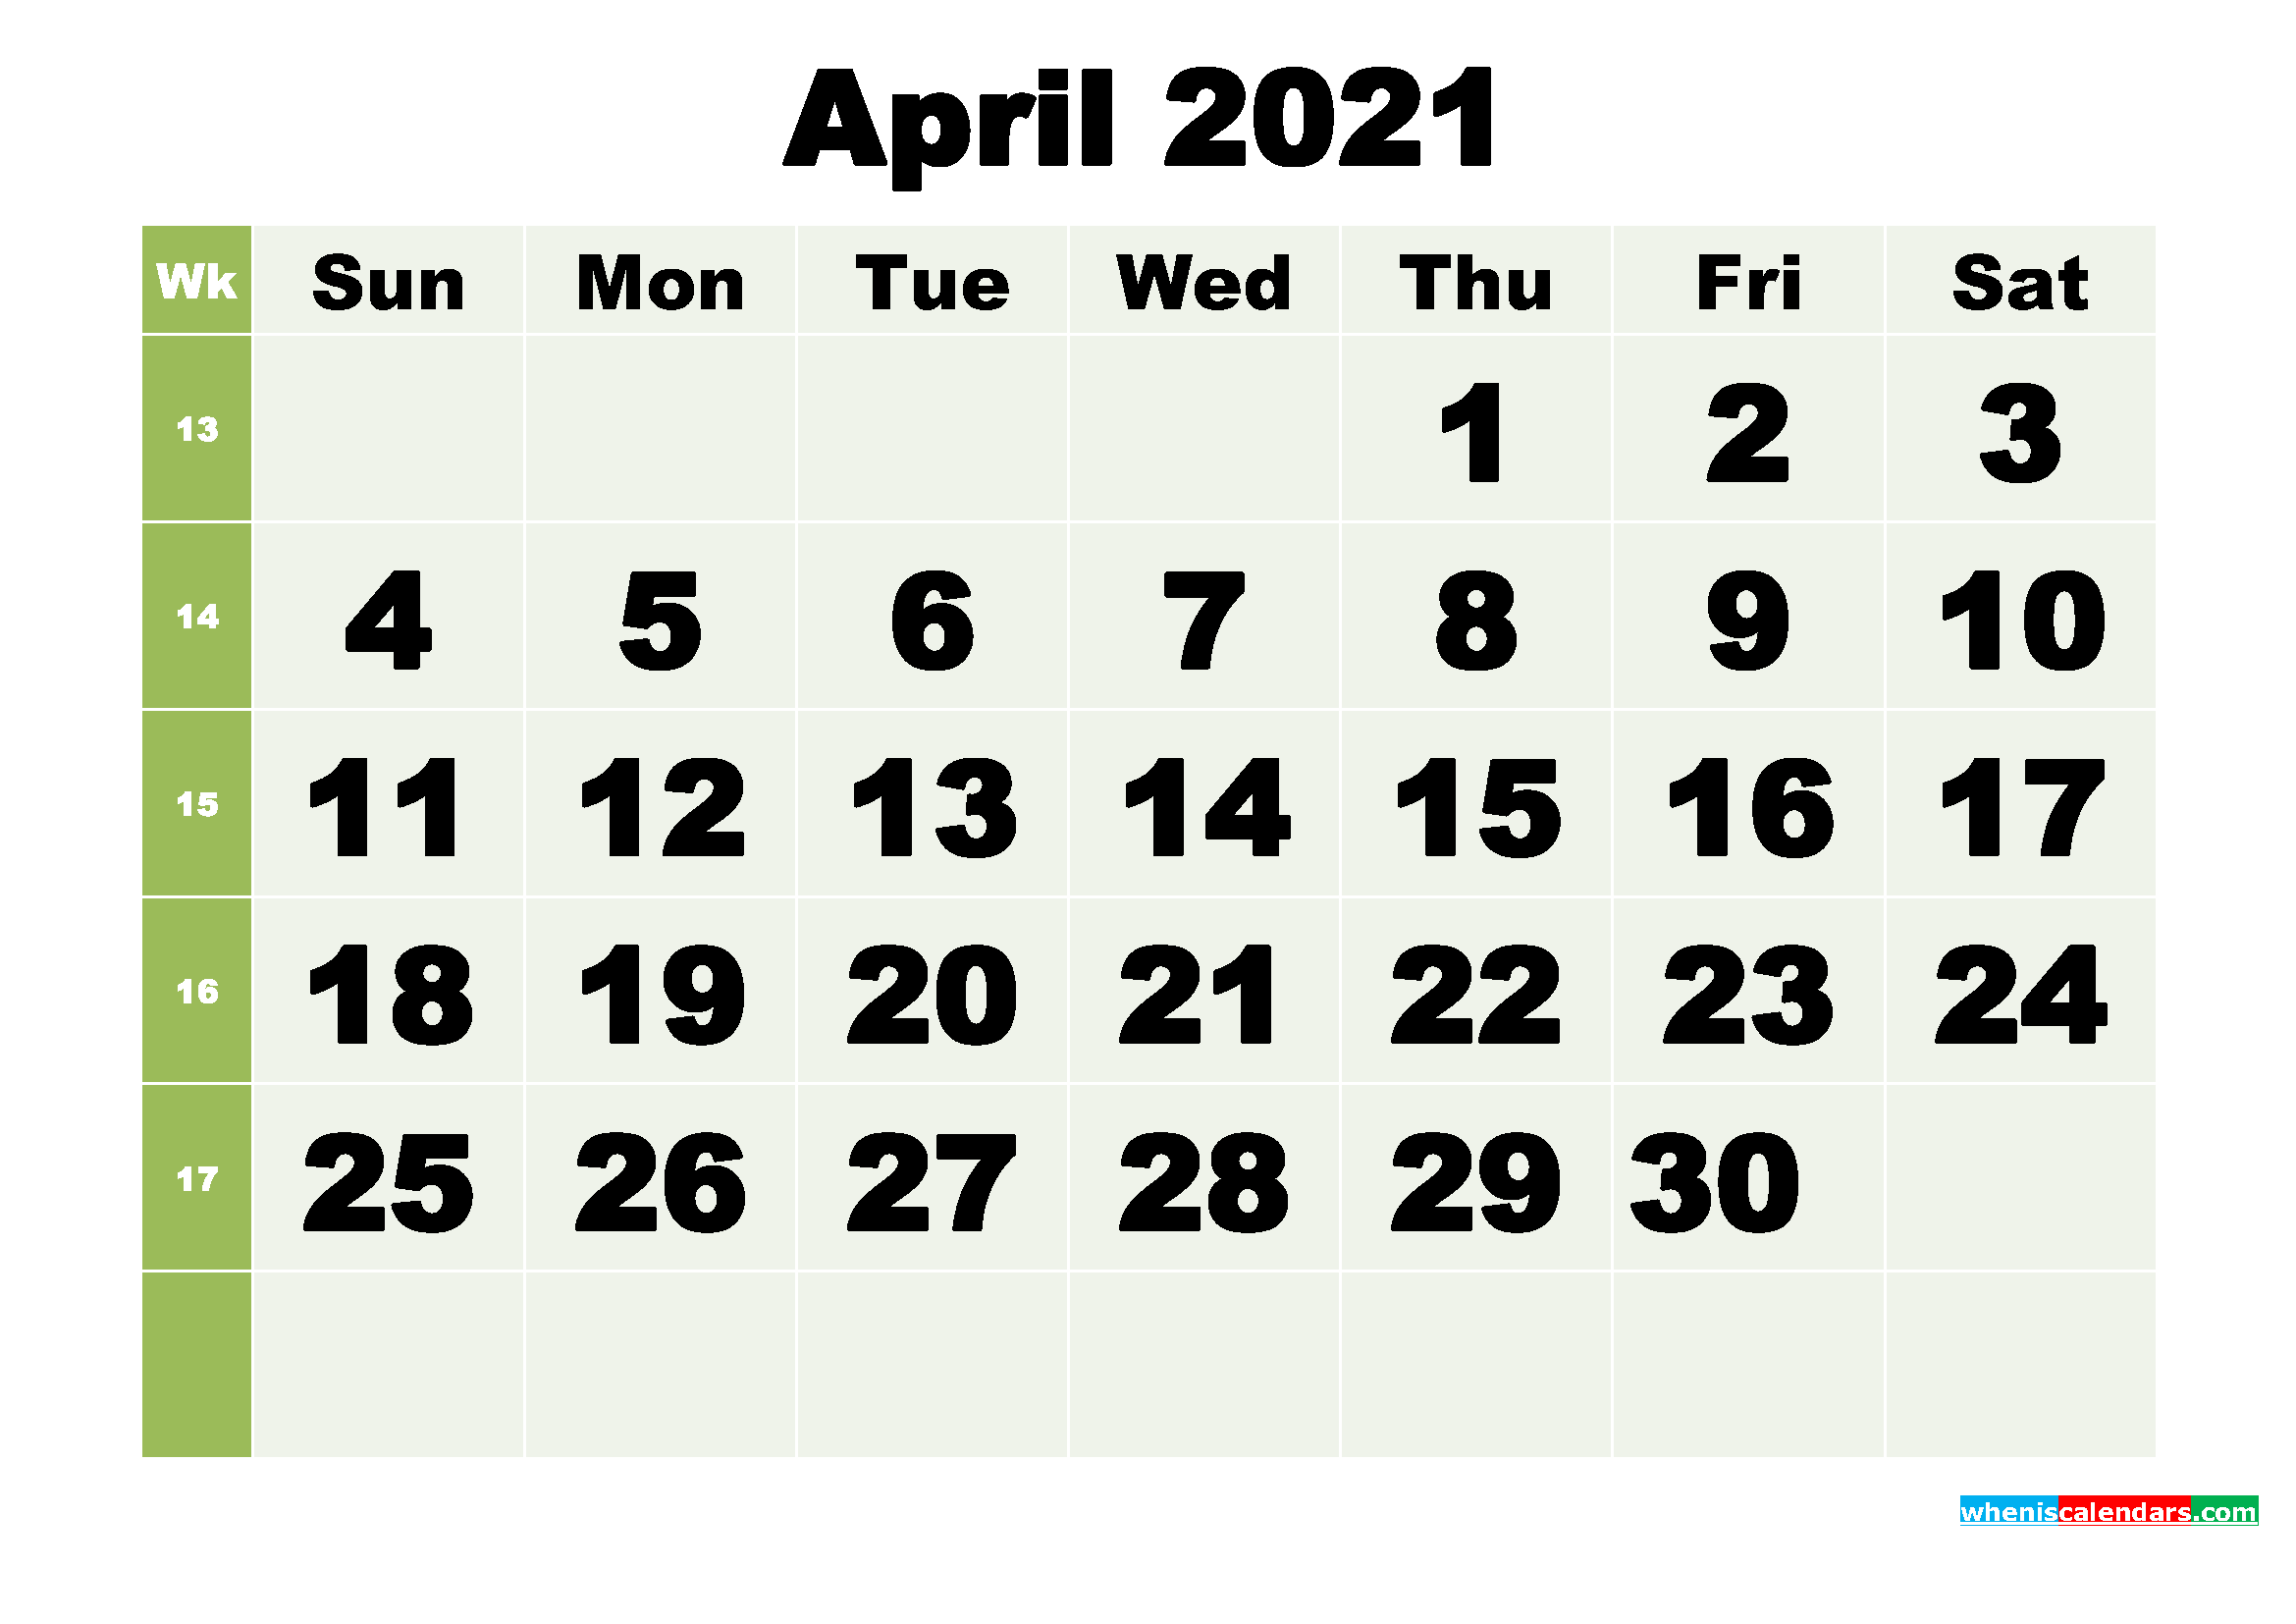 April 2021 Printable Calendar Template